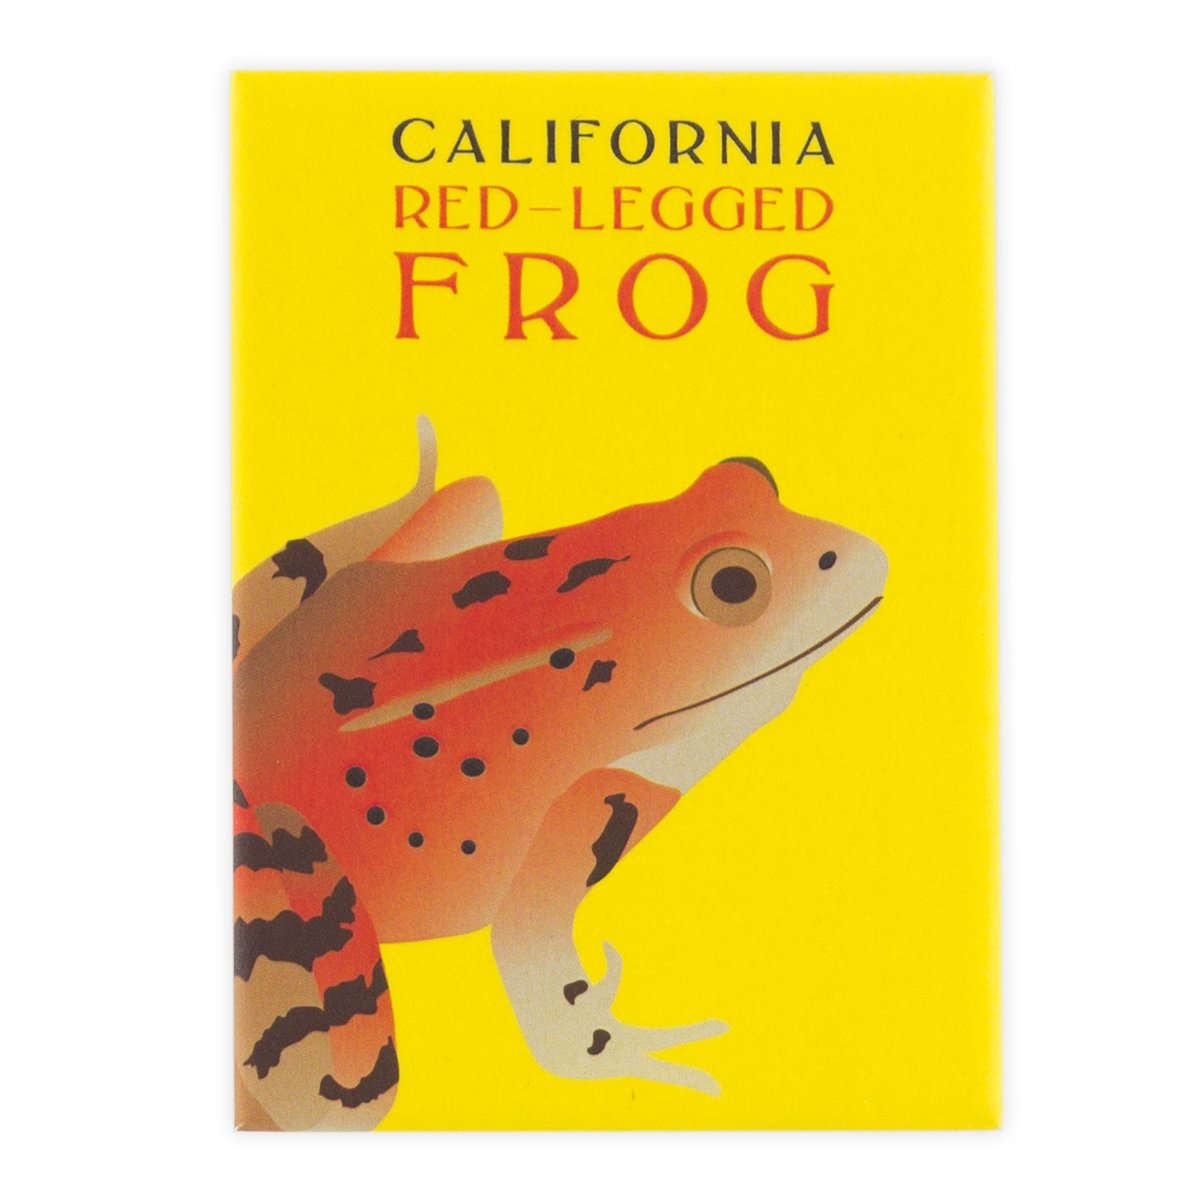 Colorful California red-legged frog magnet, featuring illustration of California's state amphibian Rana draytonii.